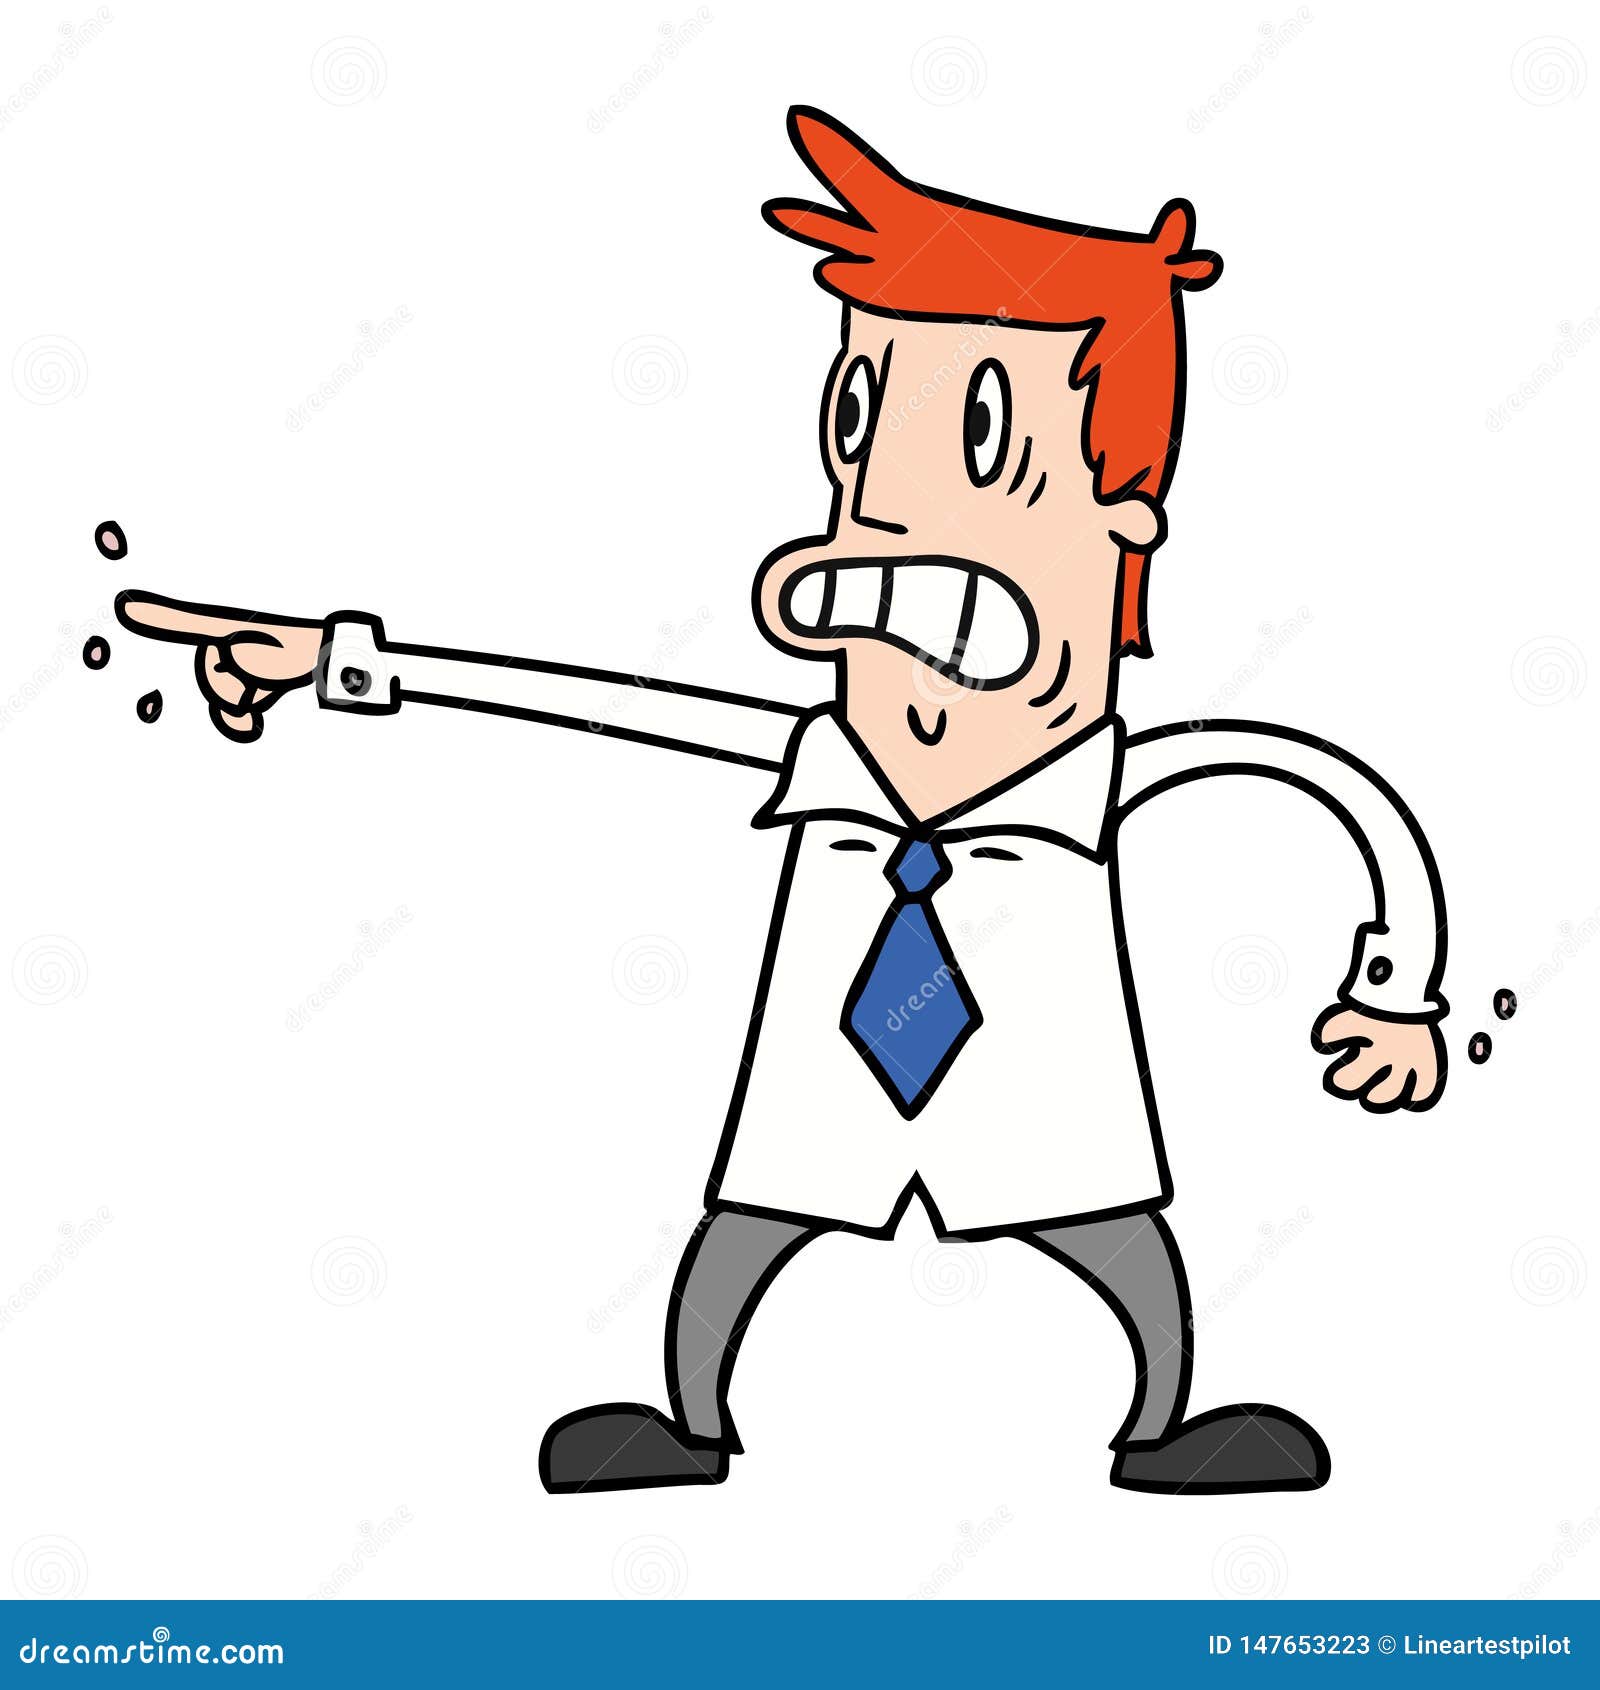 Cartoon Doodle Man Pointing Looking Worried Stock Vector - Illustration of  cartoon, suit: 147653223